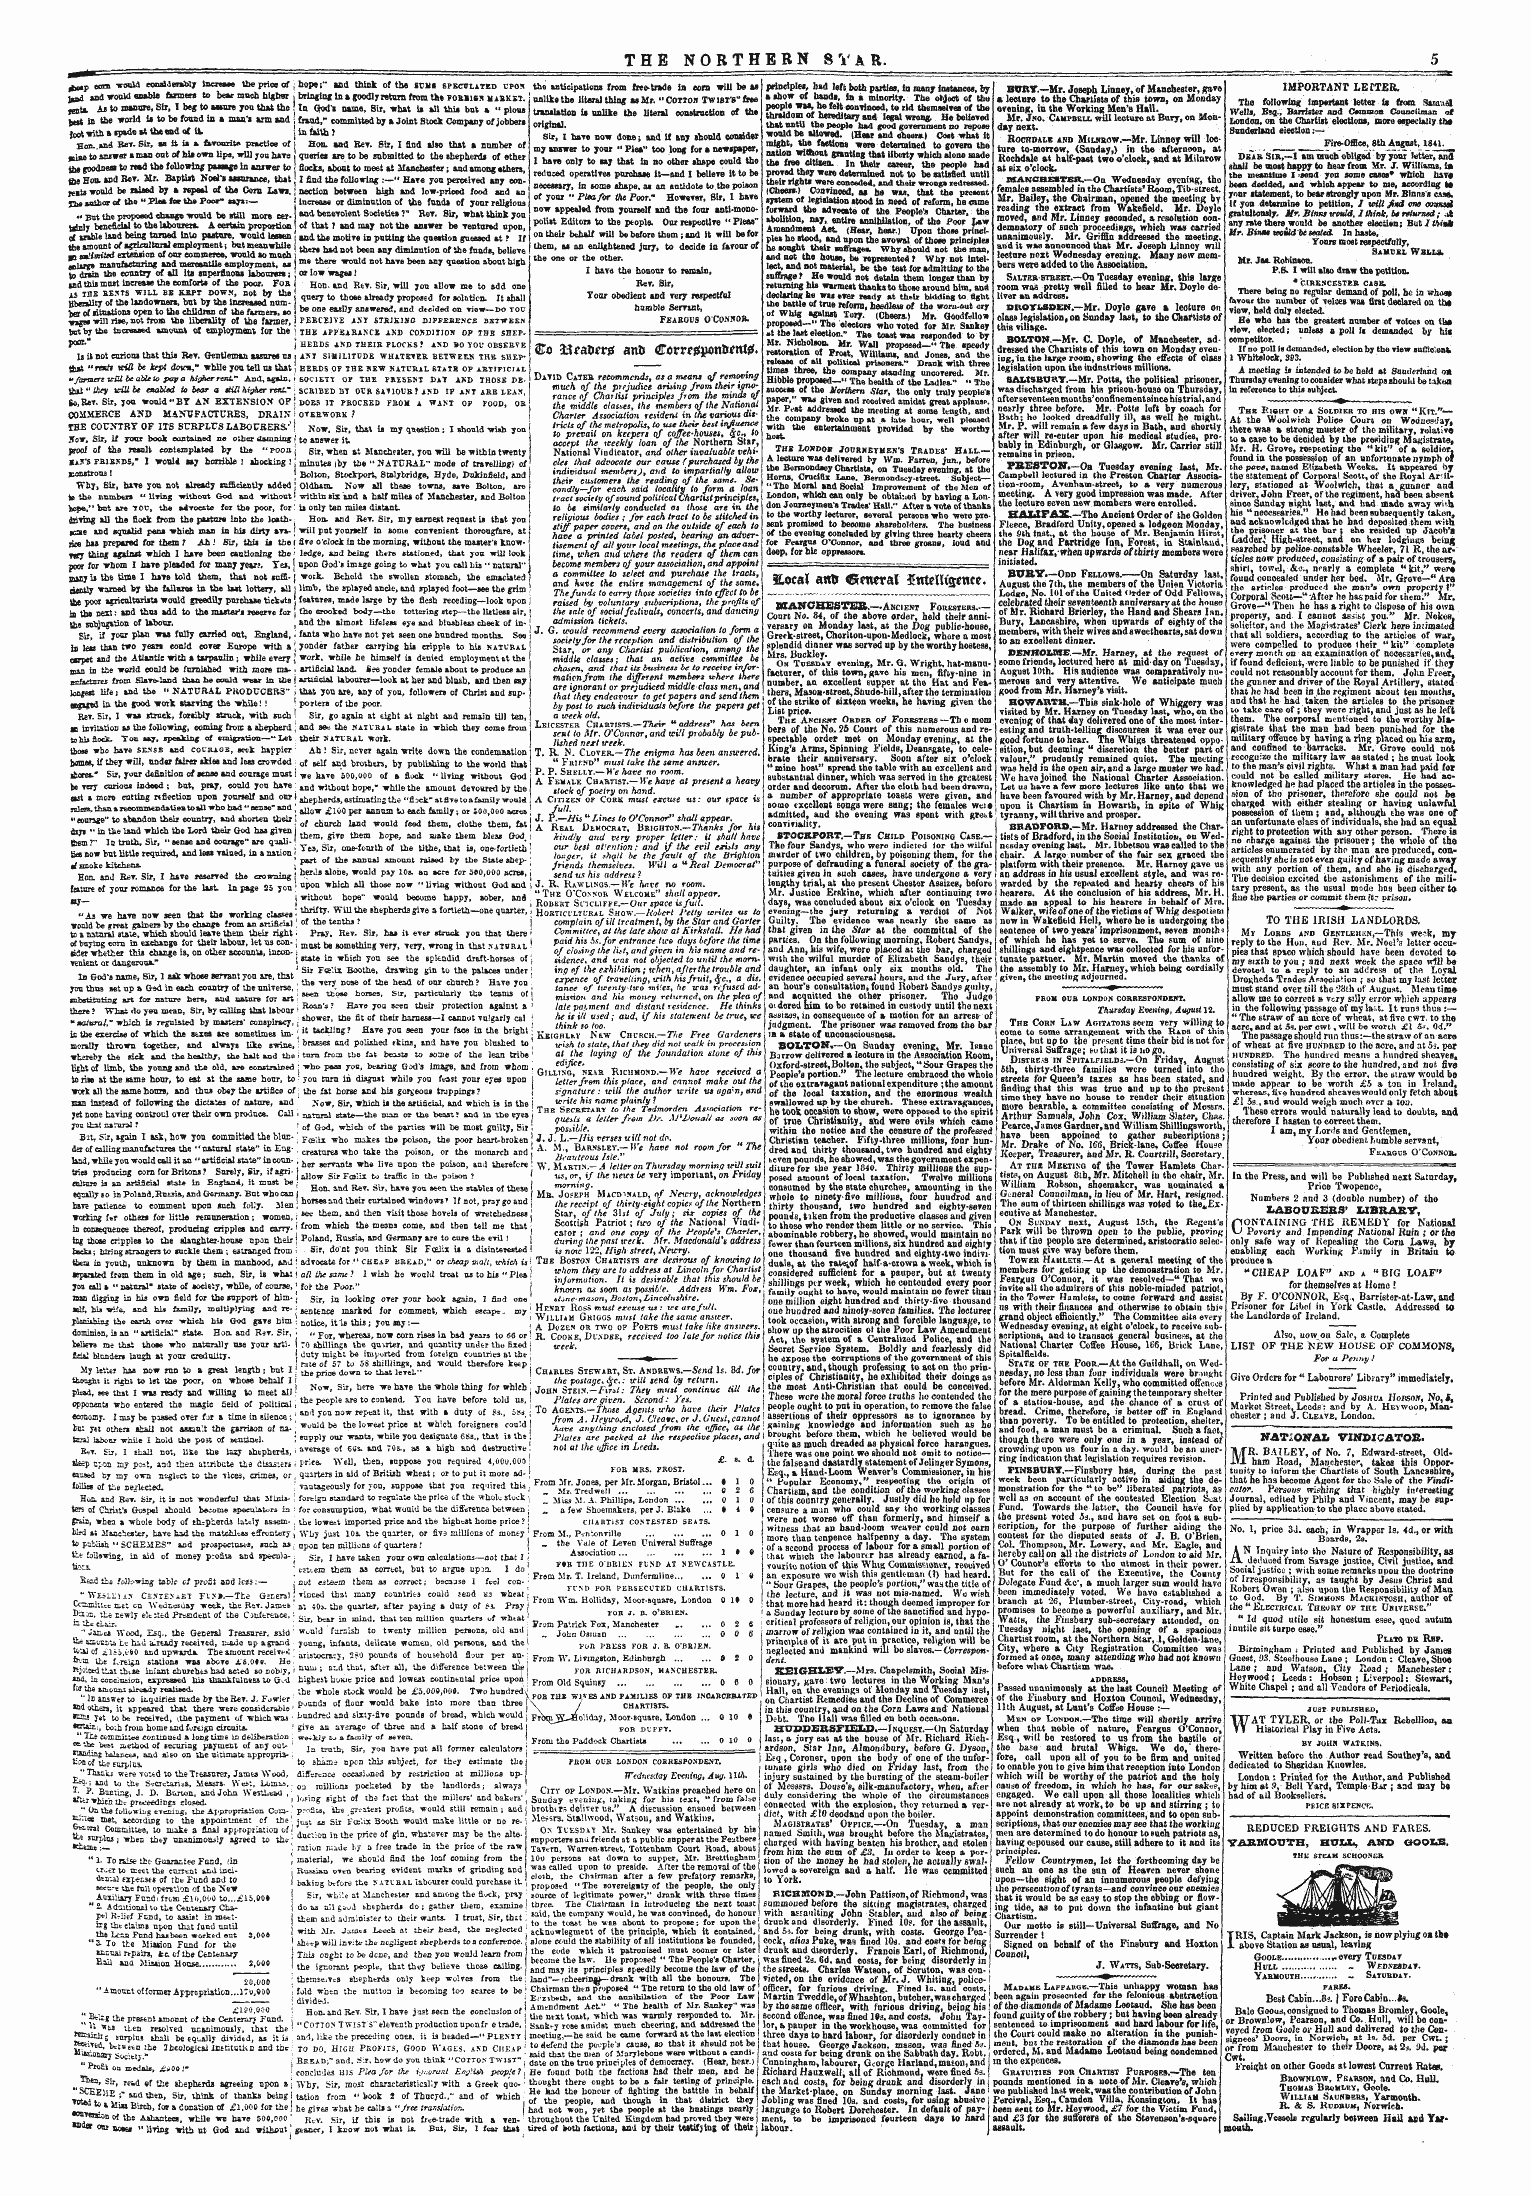 Northern Star (1837-1852): jS F Y, 4th edition - Untitled Ad